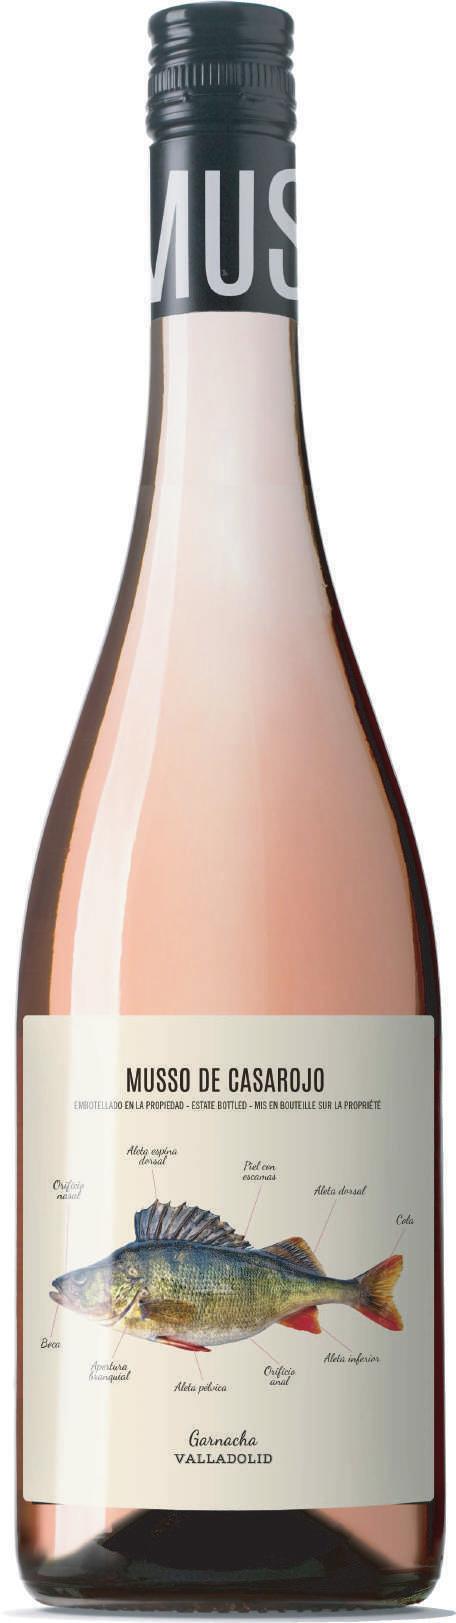 GARNACHA 2018 Vino rosato - 100% Garnacha - Vinos de la Tierra de Castilla y León NOTE DI DEGUSTAZIONE La nostra Garnacha della Valle del Duero, coltivata nella provincia di Valladolid.